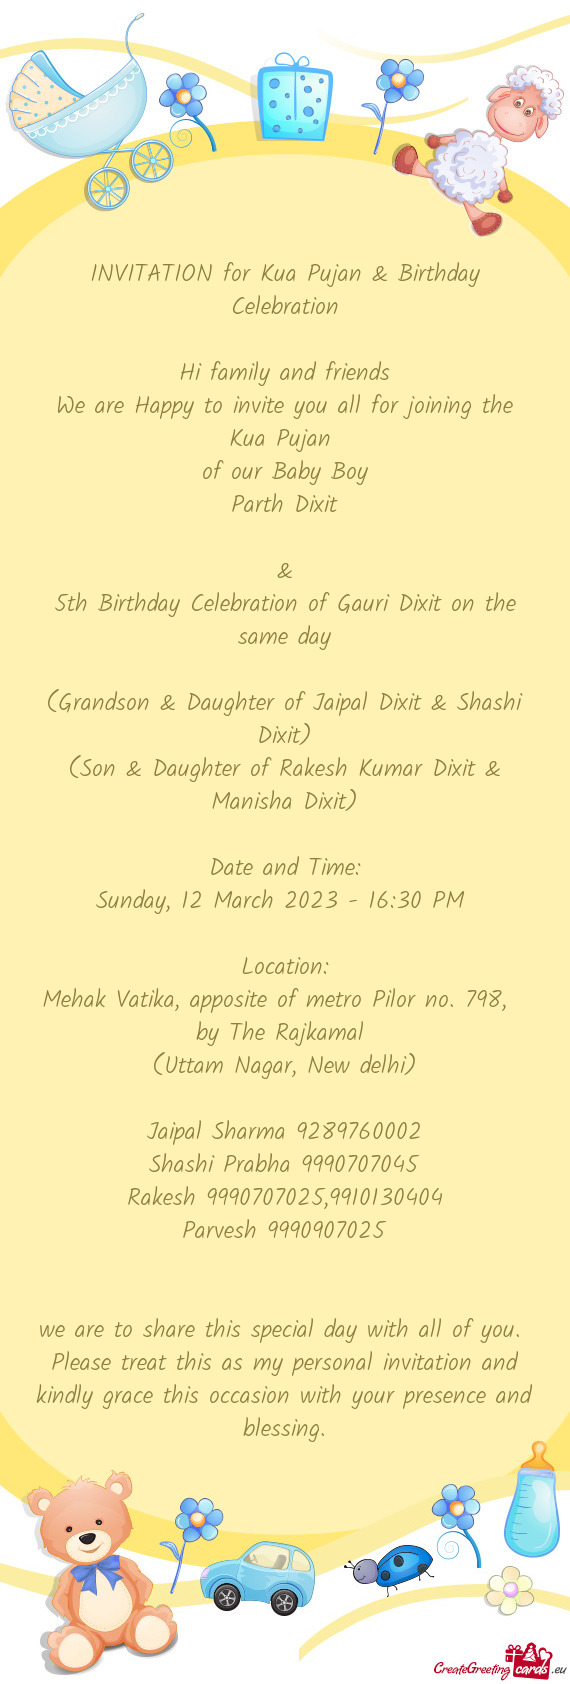 INVITATION for Kua Pujan & Birthday Celebration